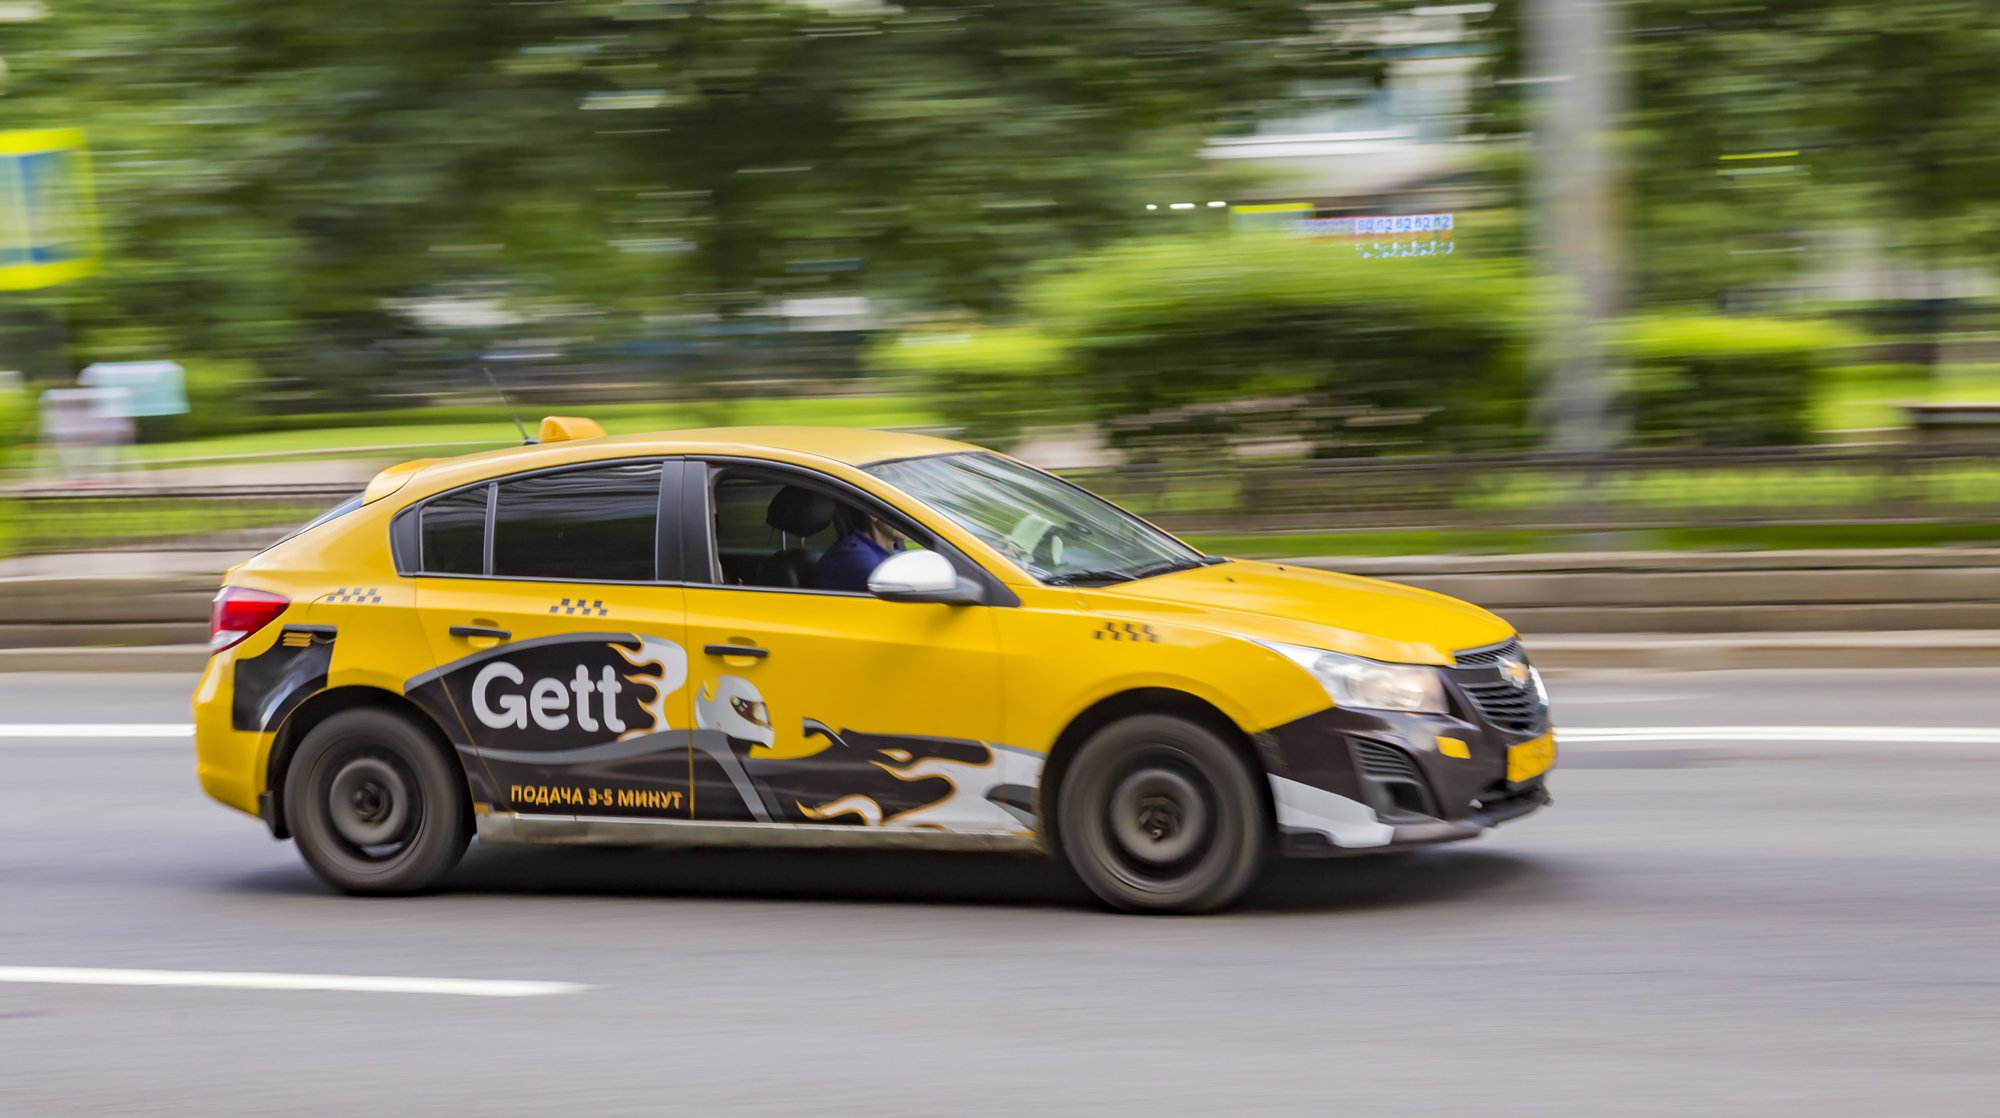 Dailystorm - Gett пожаловался в ФАС на «Яндекс.Такси» из-за поста в Facebook